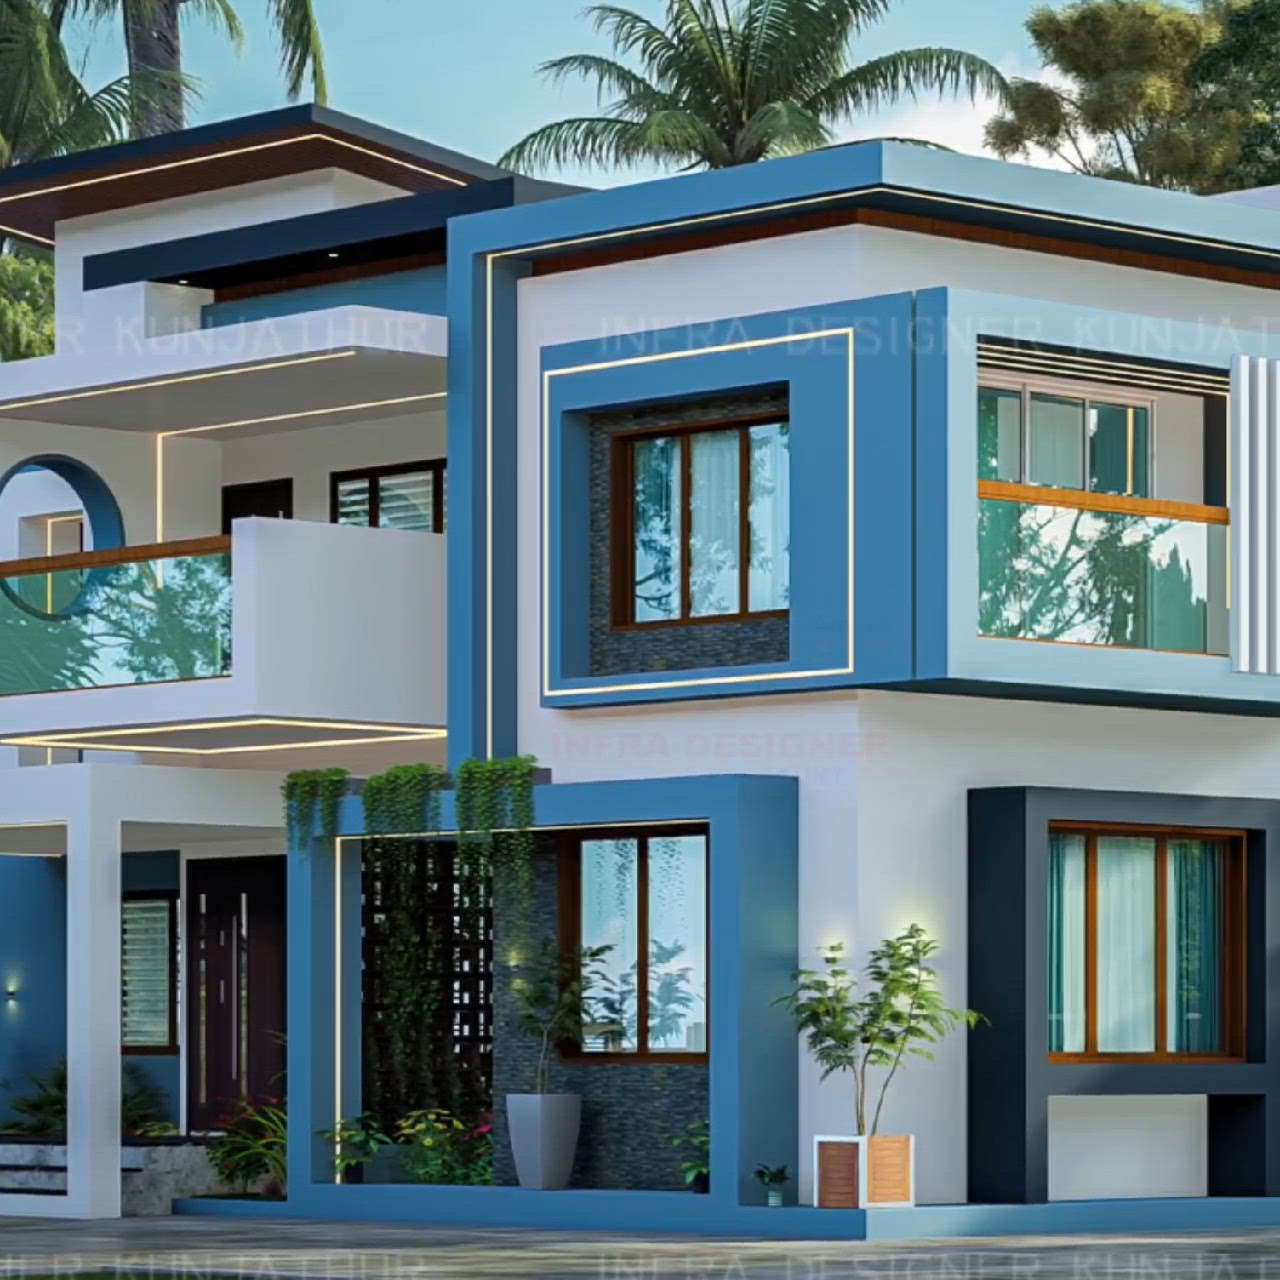 #exteriordesigns #ContemporaryHouse #3dmodeling 
#KeralaStyleHouse